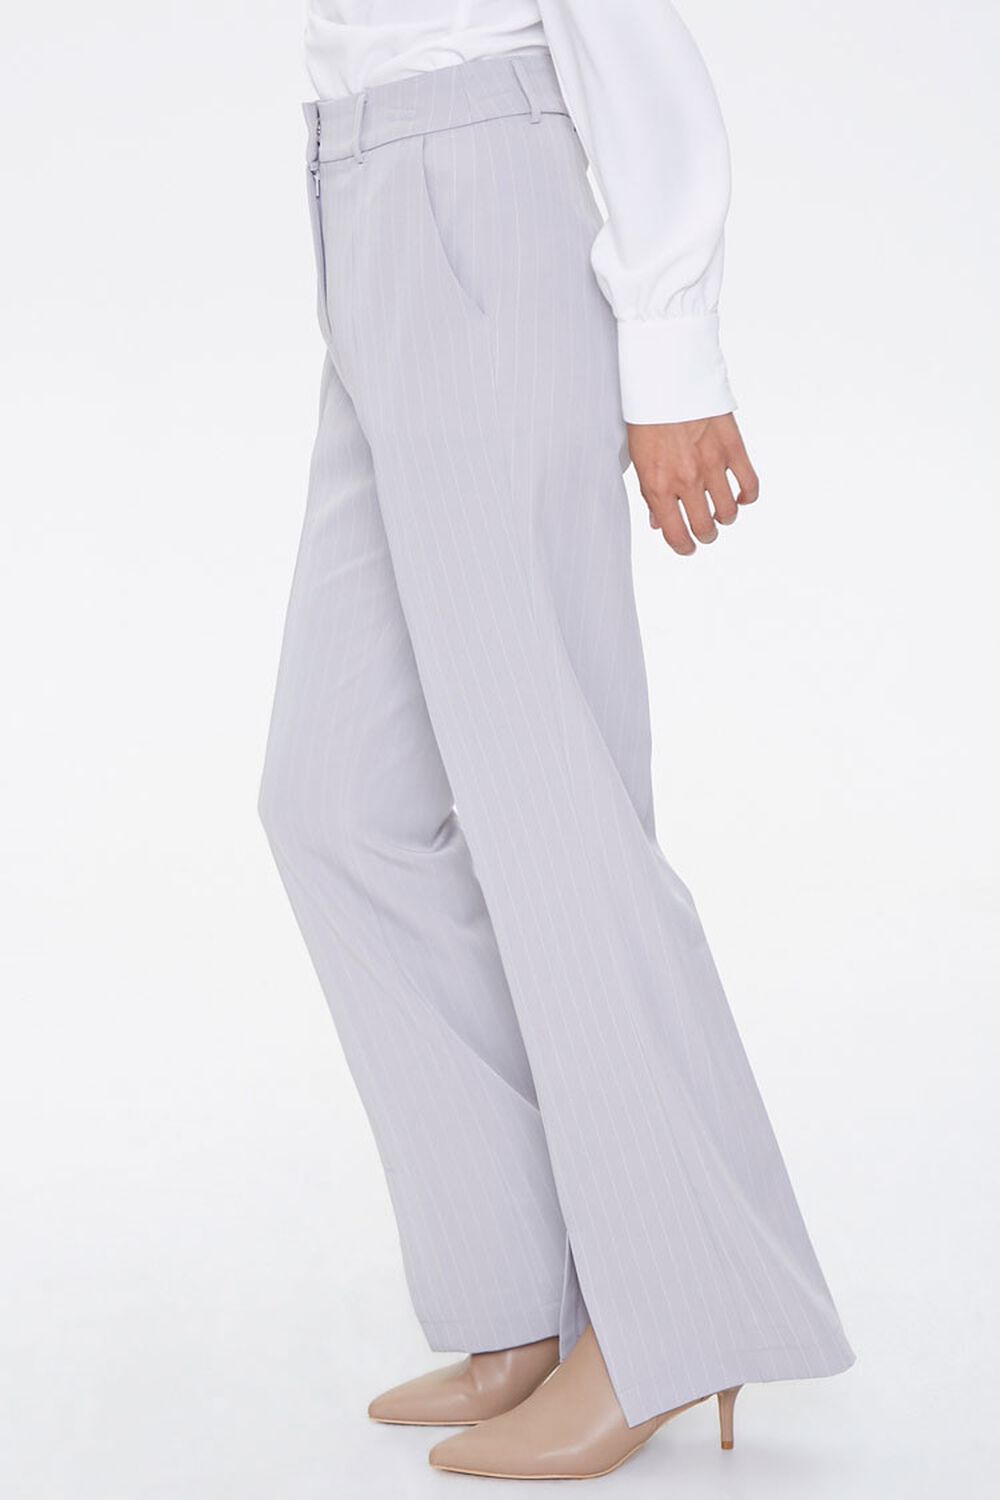 Striped Split-Hem Pants